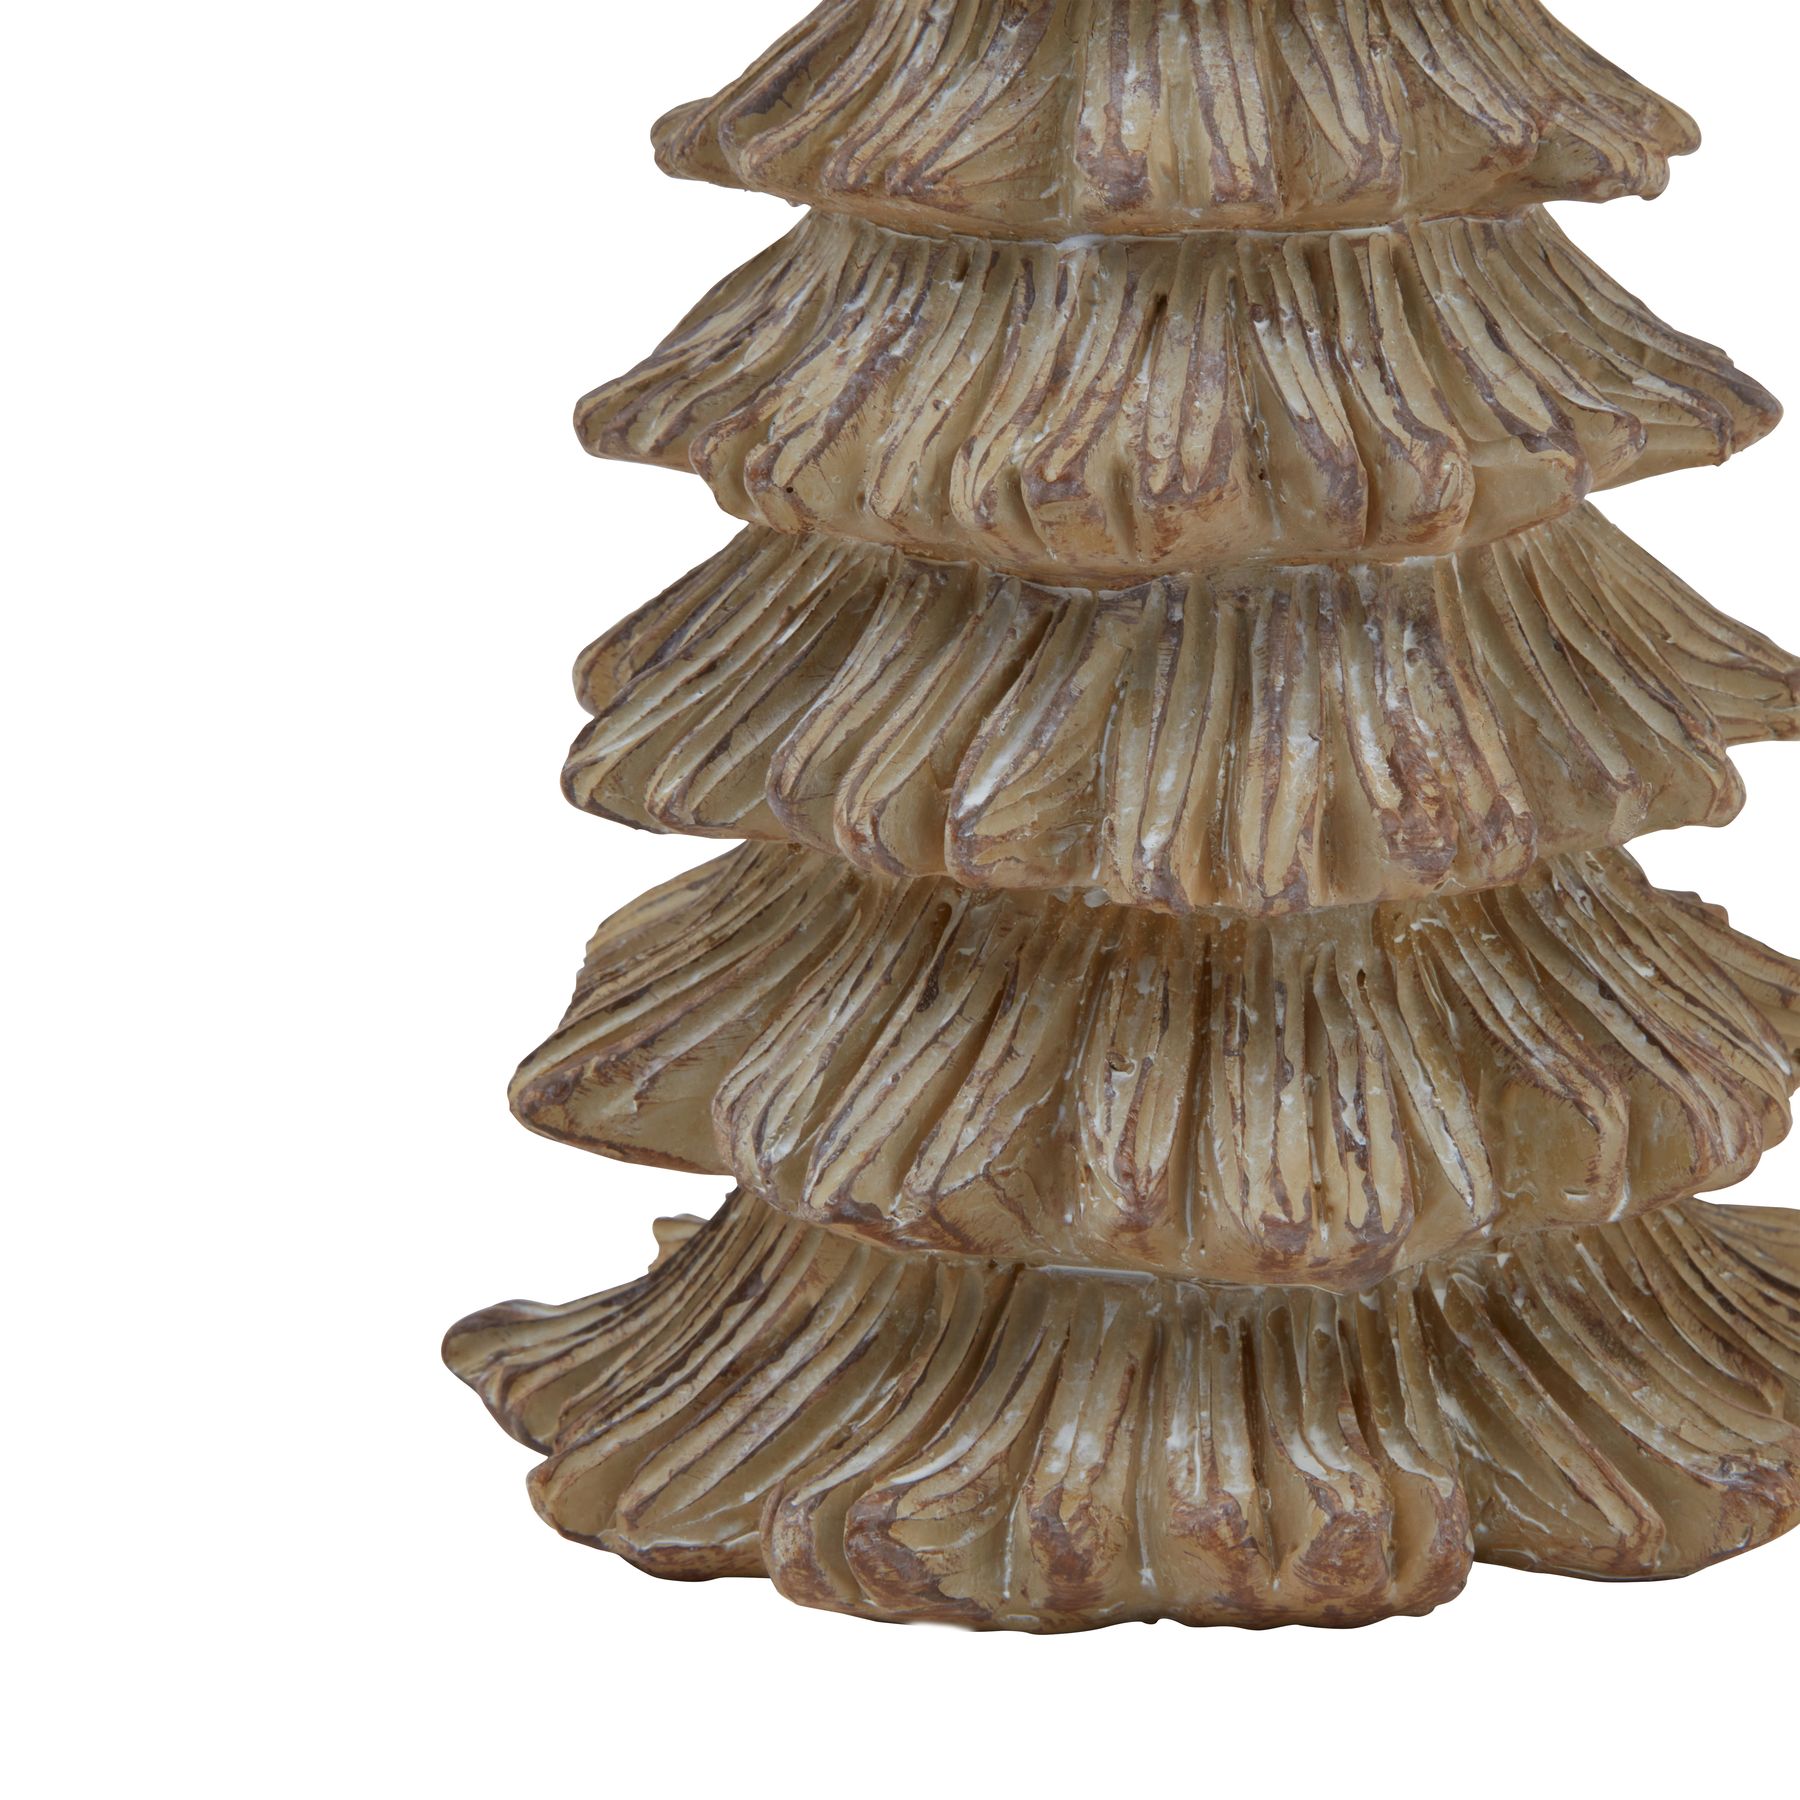 Medium Pine Tree Sculpture - Image 3